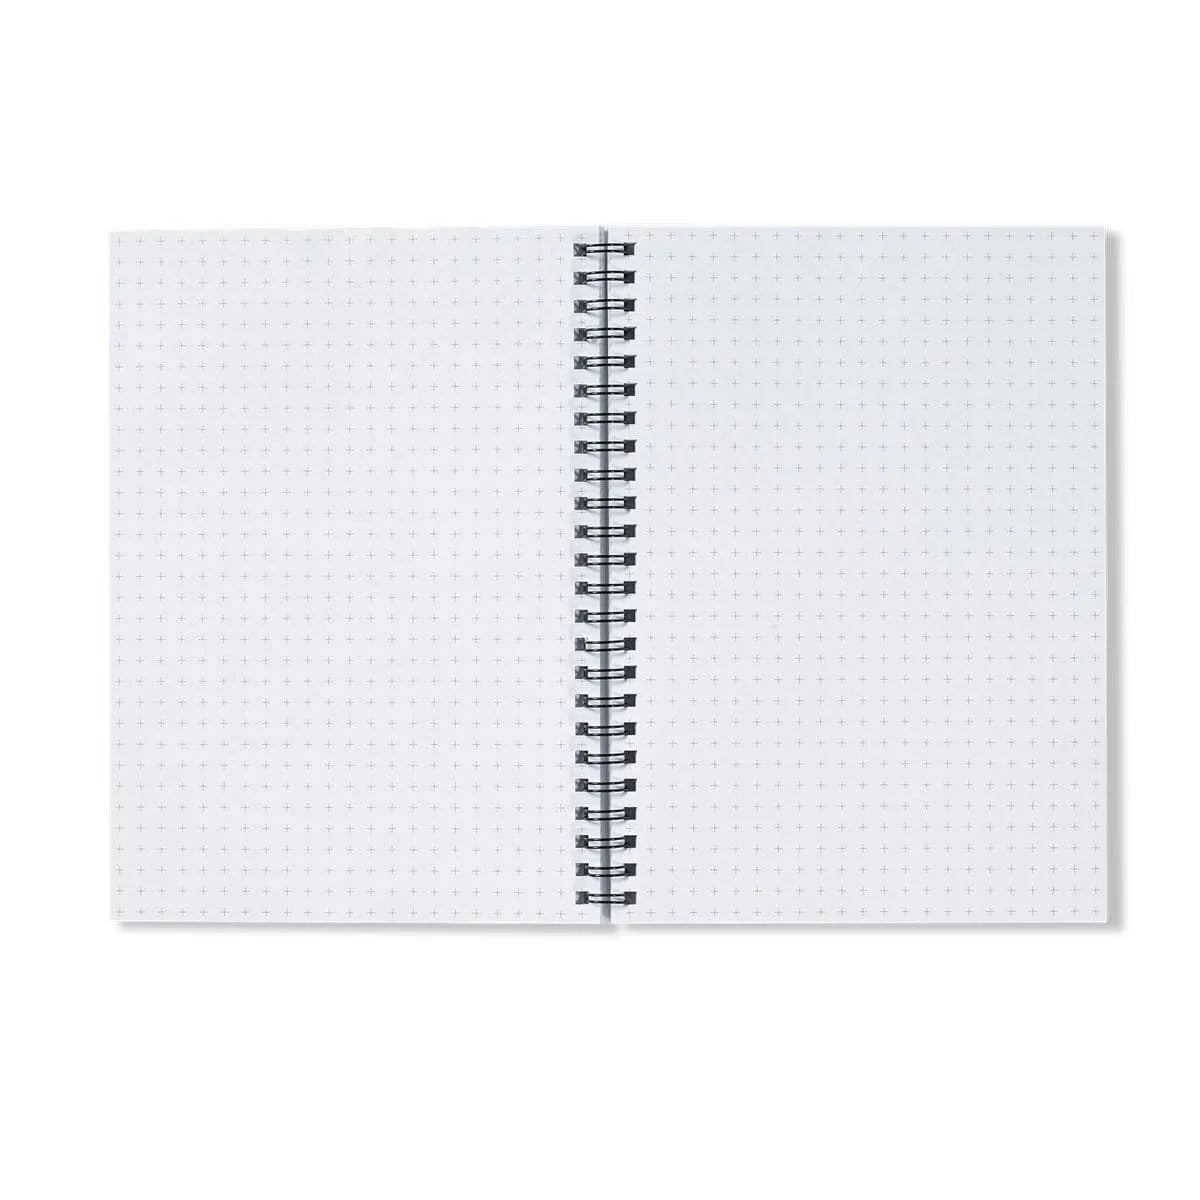 Feeding Time Notebook - Notebooks & Notepads - Aesthetic Art